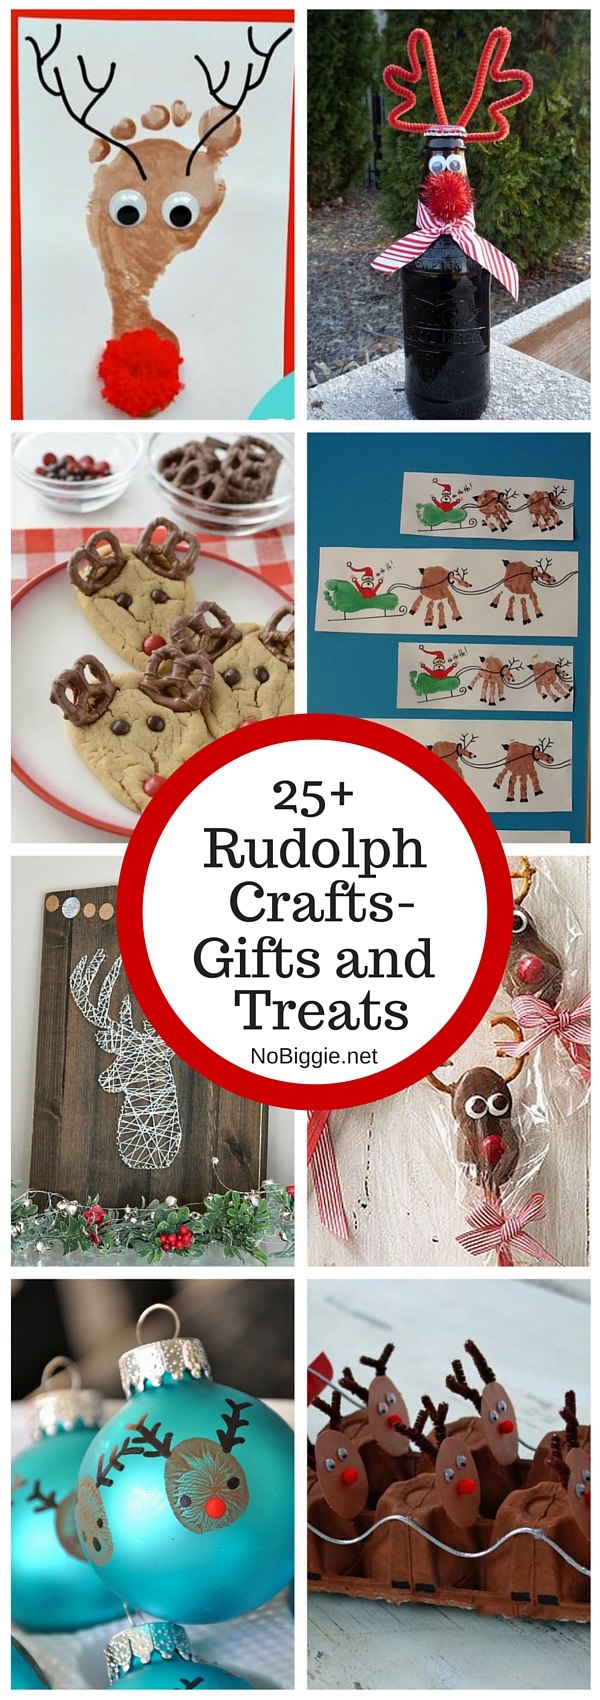 http://www.nobiggie.net/wp-content/uploads/2015/11/25-rudolph-crafts-gifts-and-treats-NoBiggie.net_1.jpg